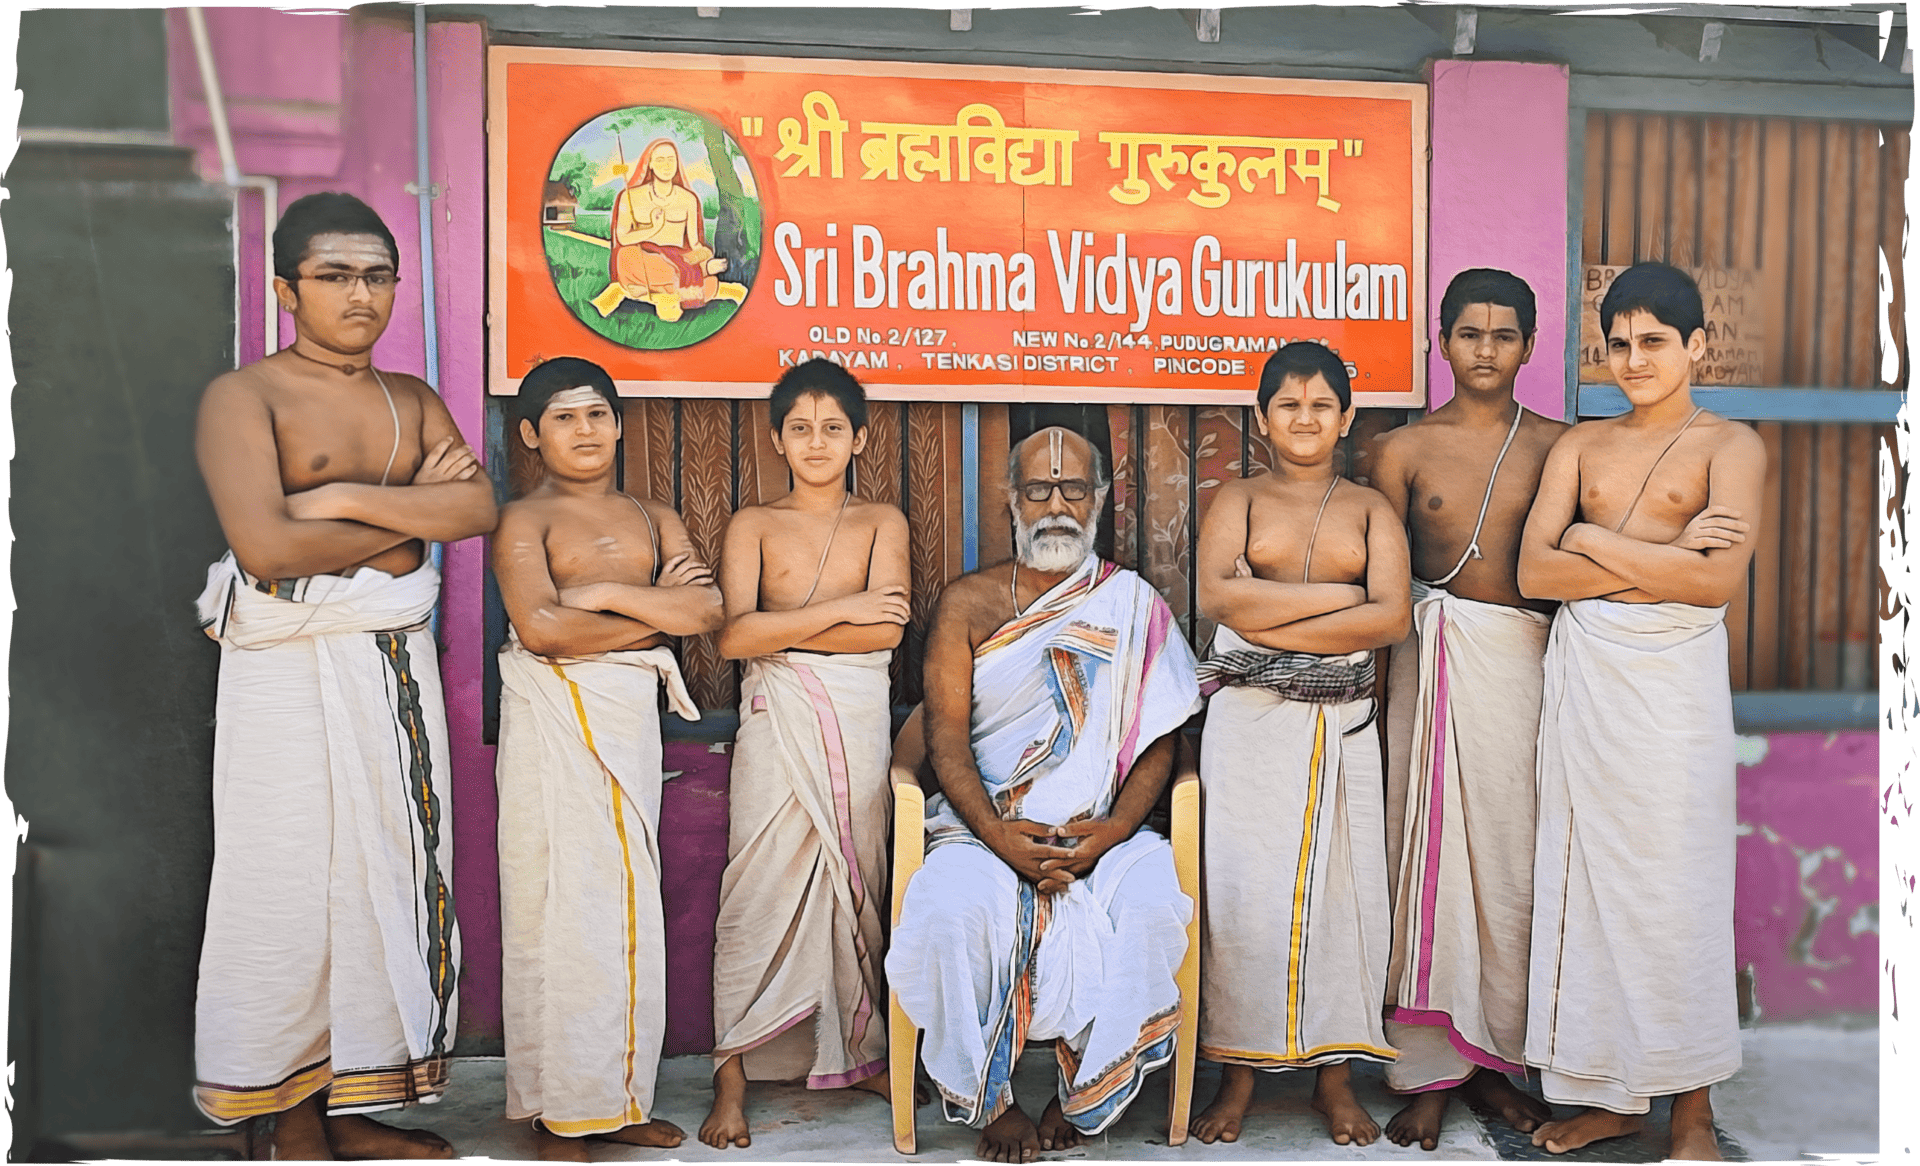 Image of Vedic students with their guru in front of the Gurukulam.